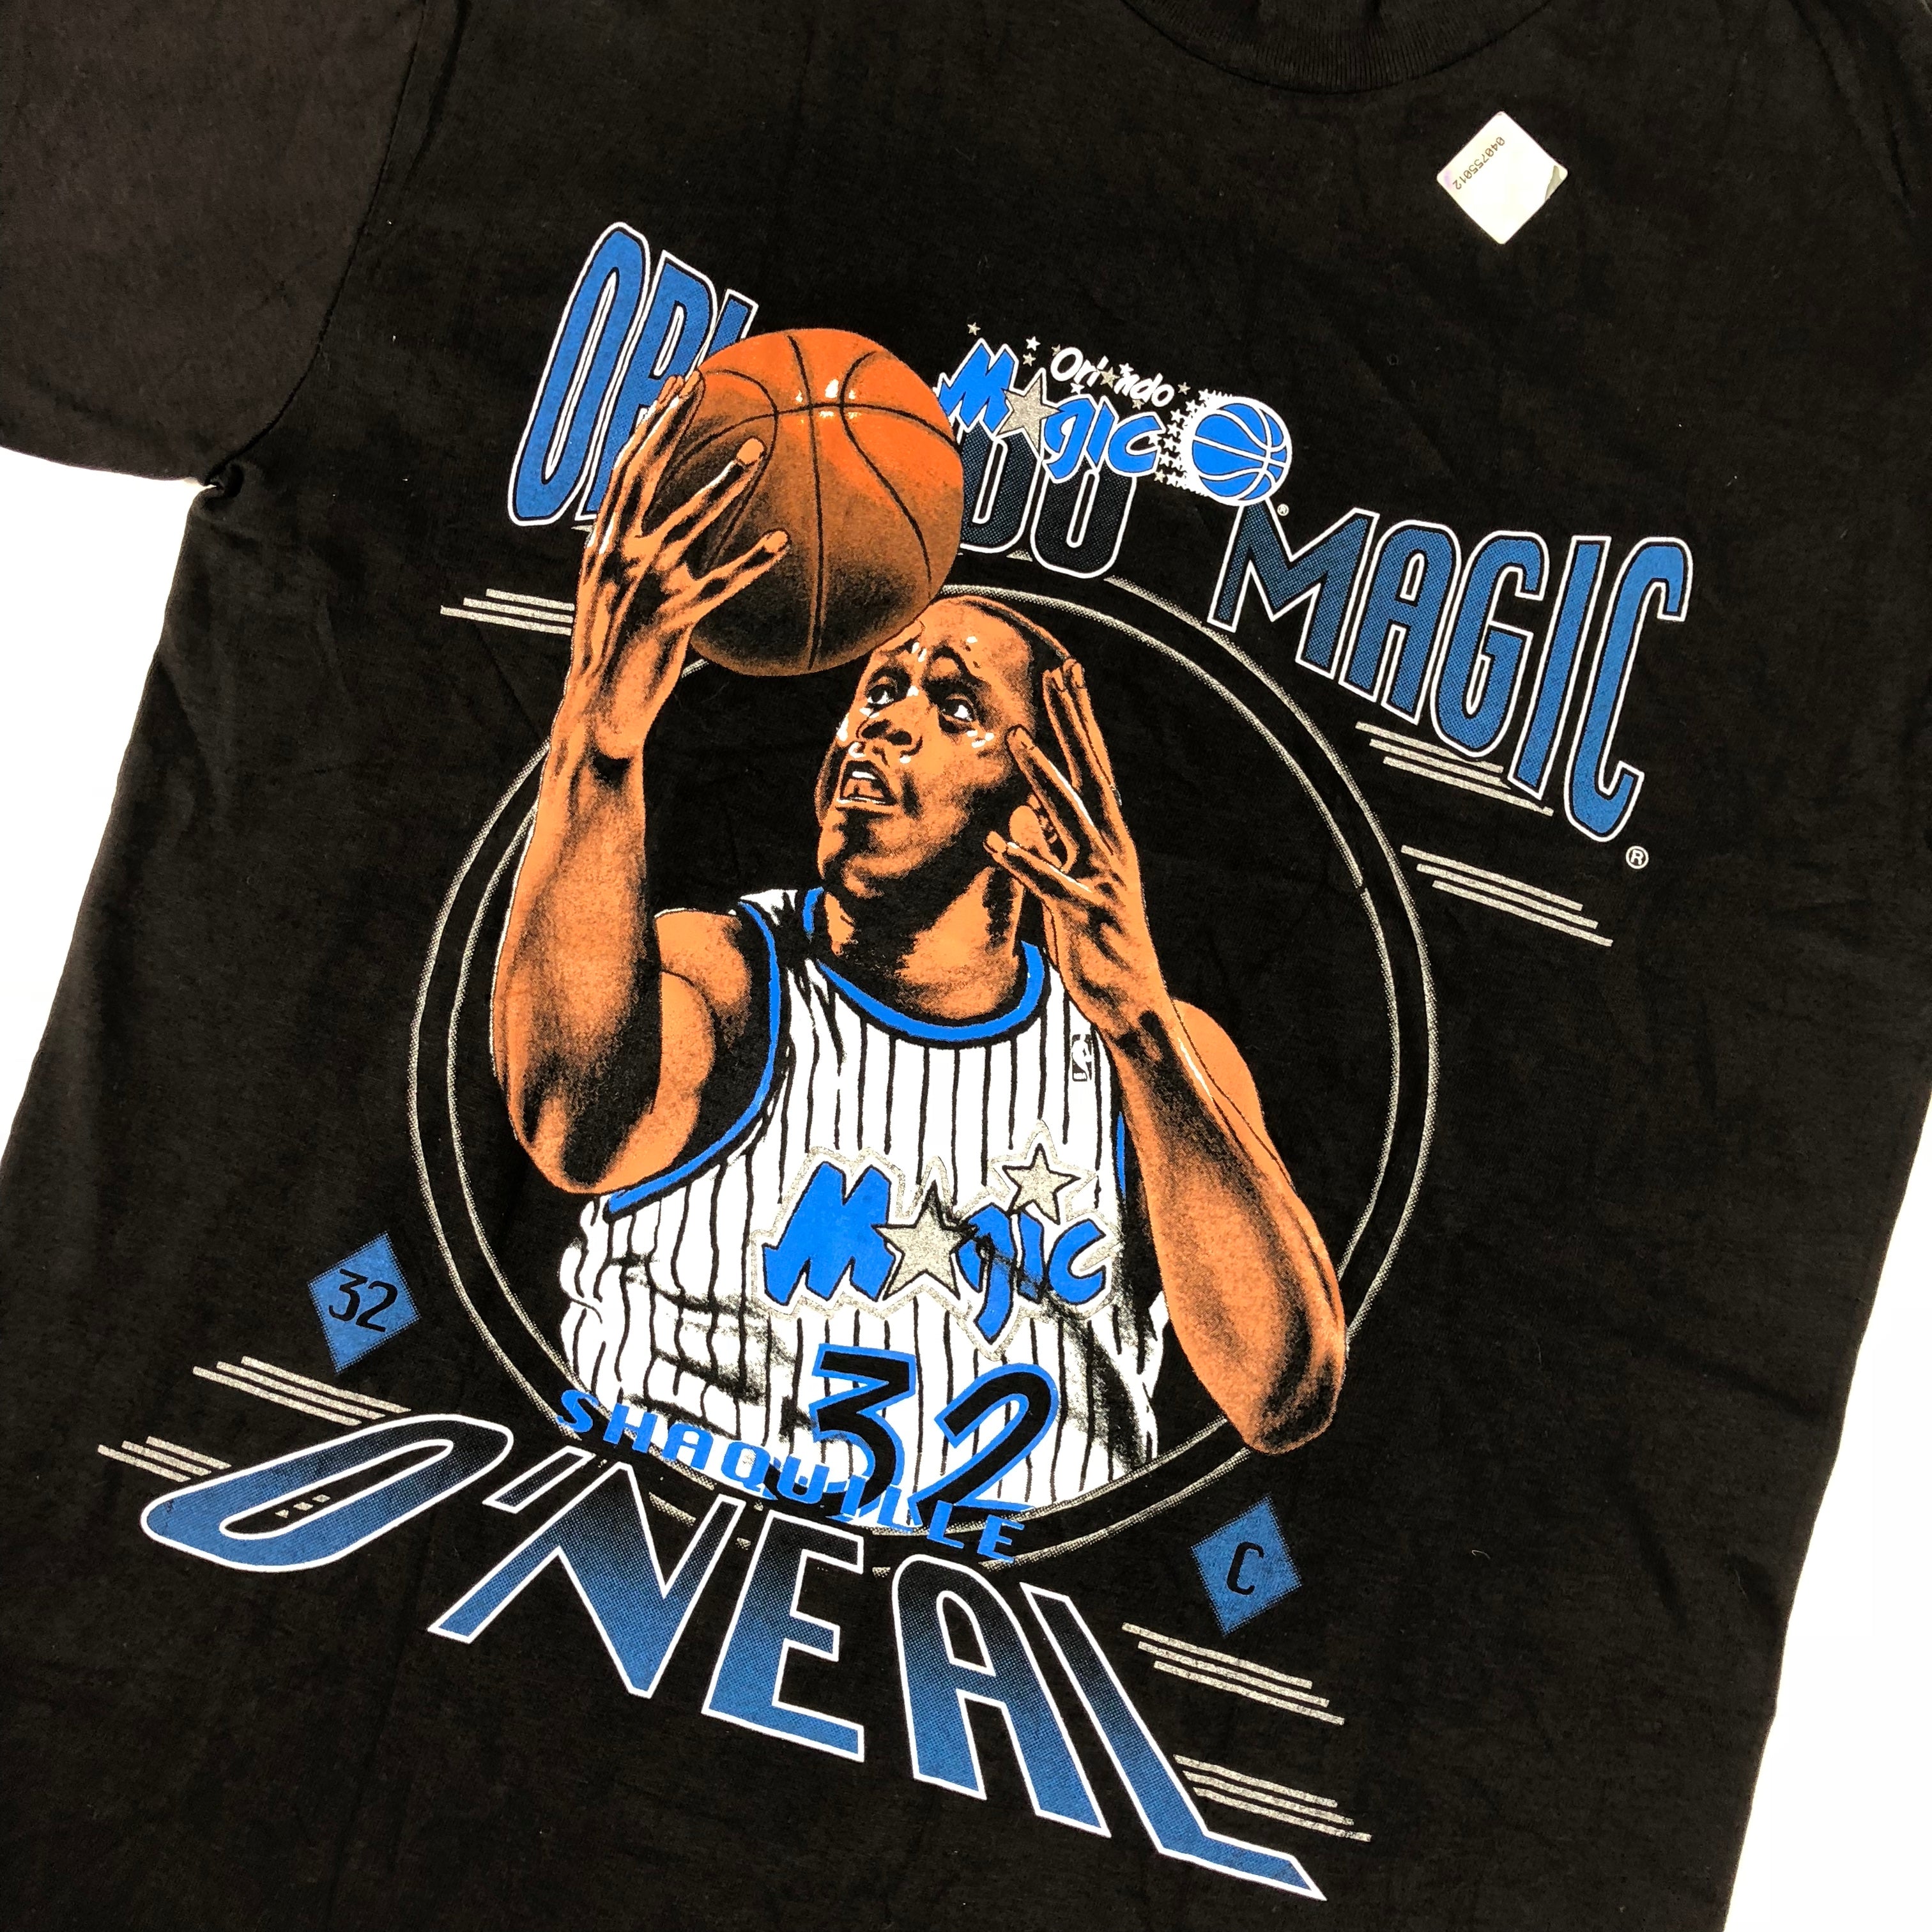 Shaquille O'Neal Orlando Magic Jerseys, Shaquille O'Neal Shirt, Magic  Shaquille O'Neal Gear & Merchandise